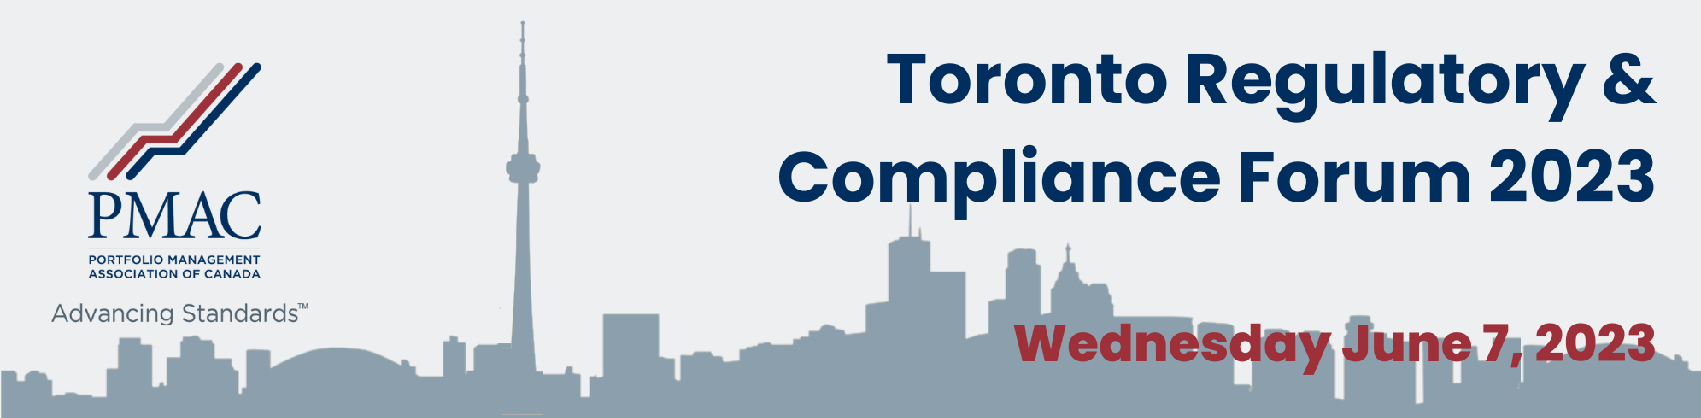 PMAC 2023 Toronto Regulatory & Compliance Forum